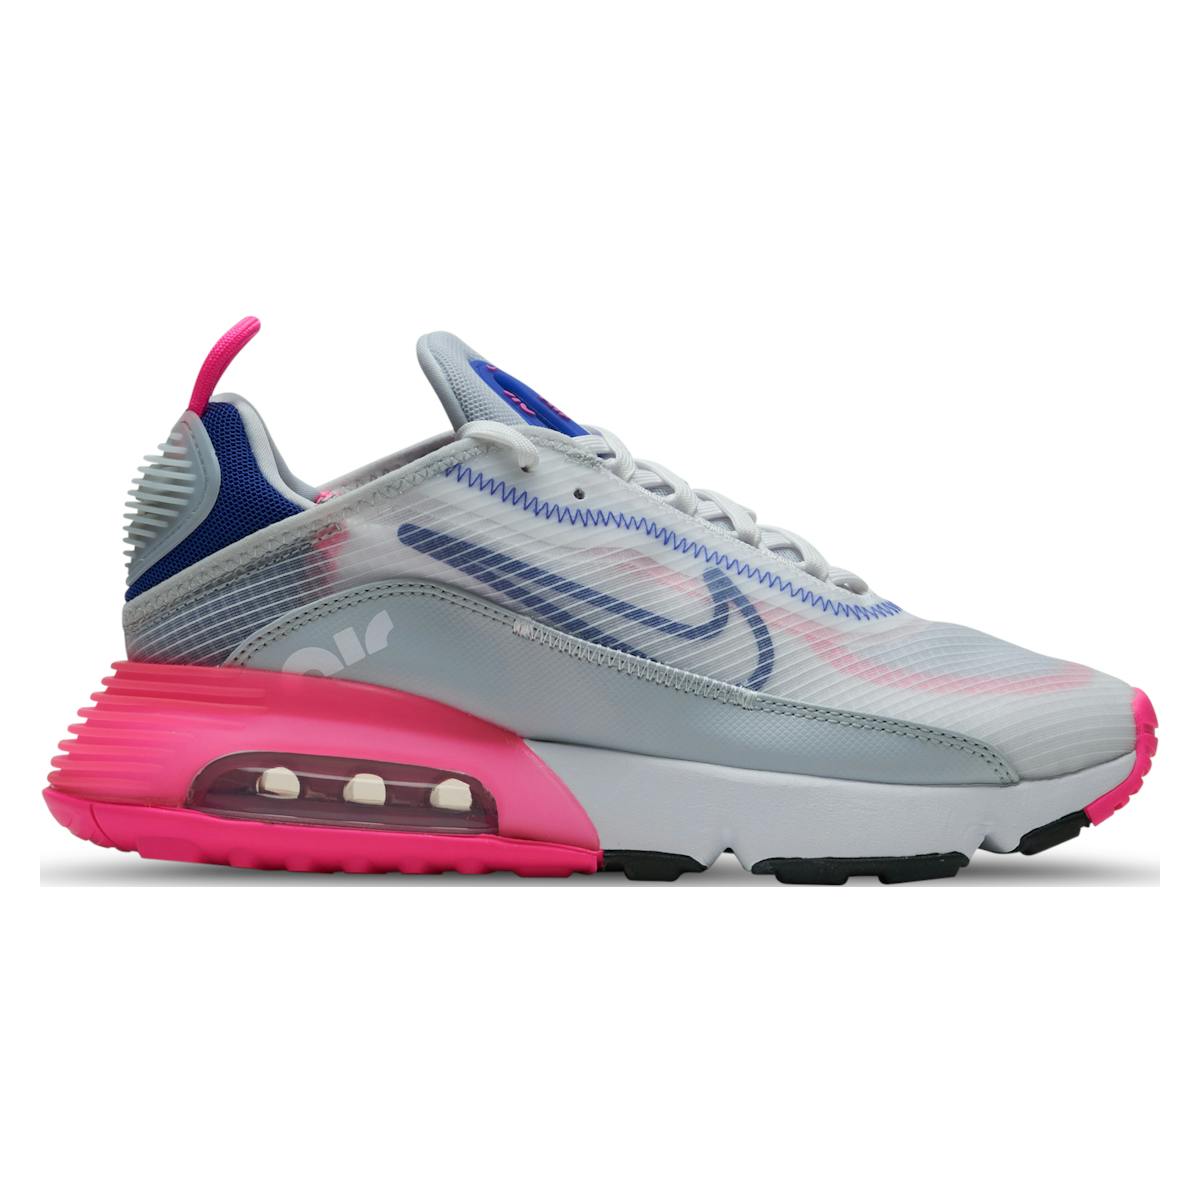 Nike Air Max 2090 Laser Pink (W)